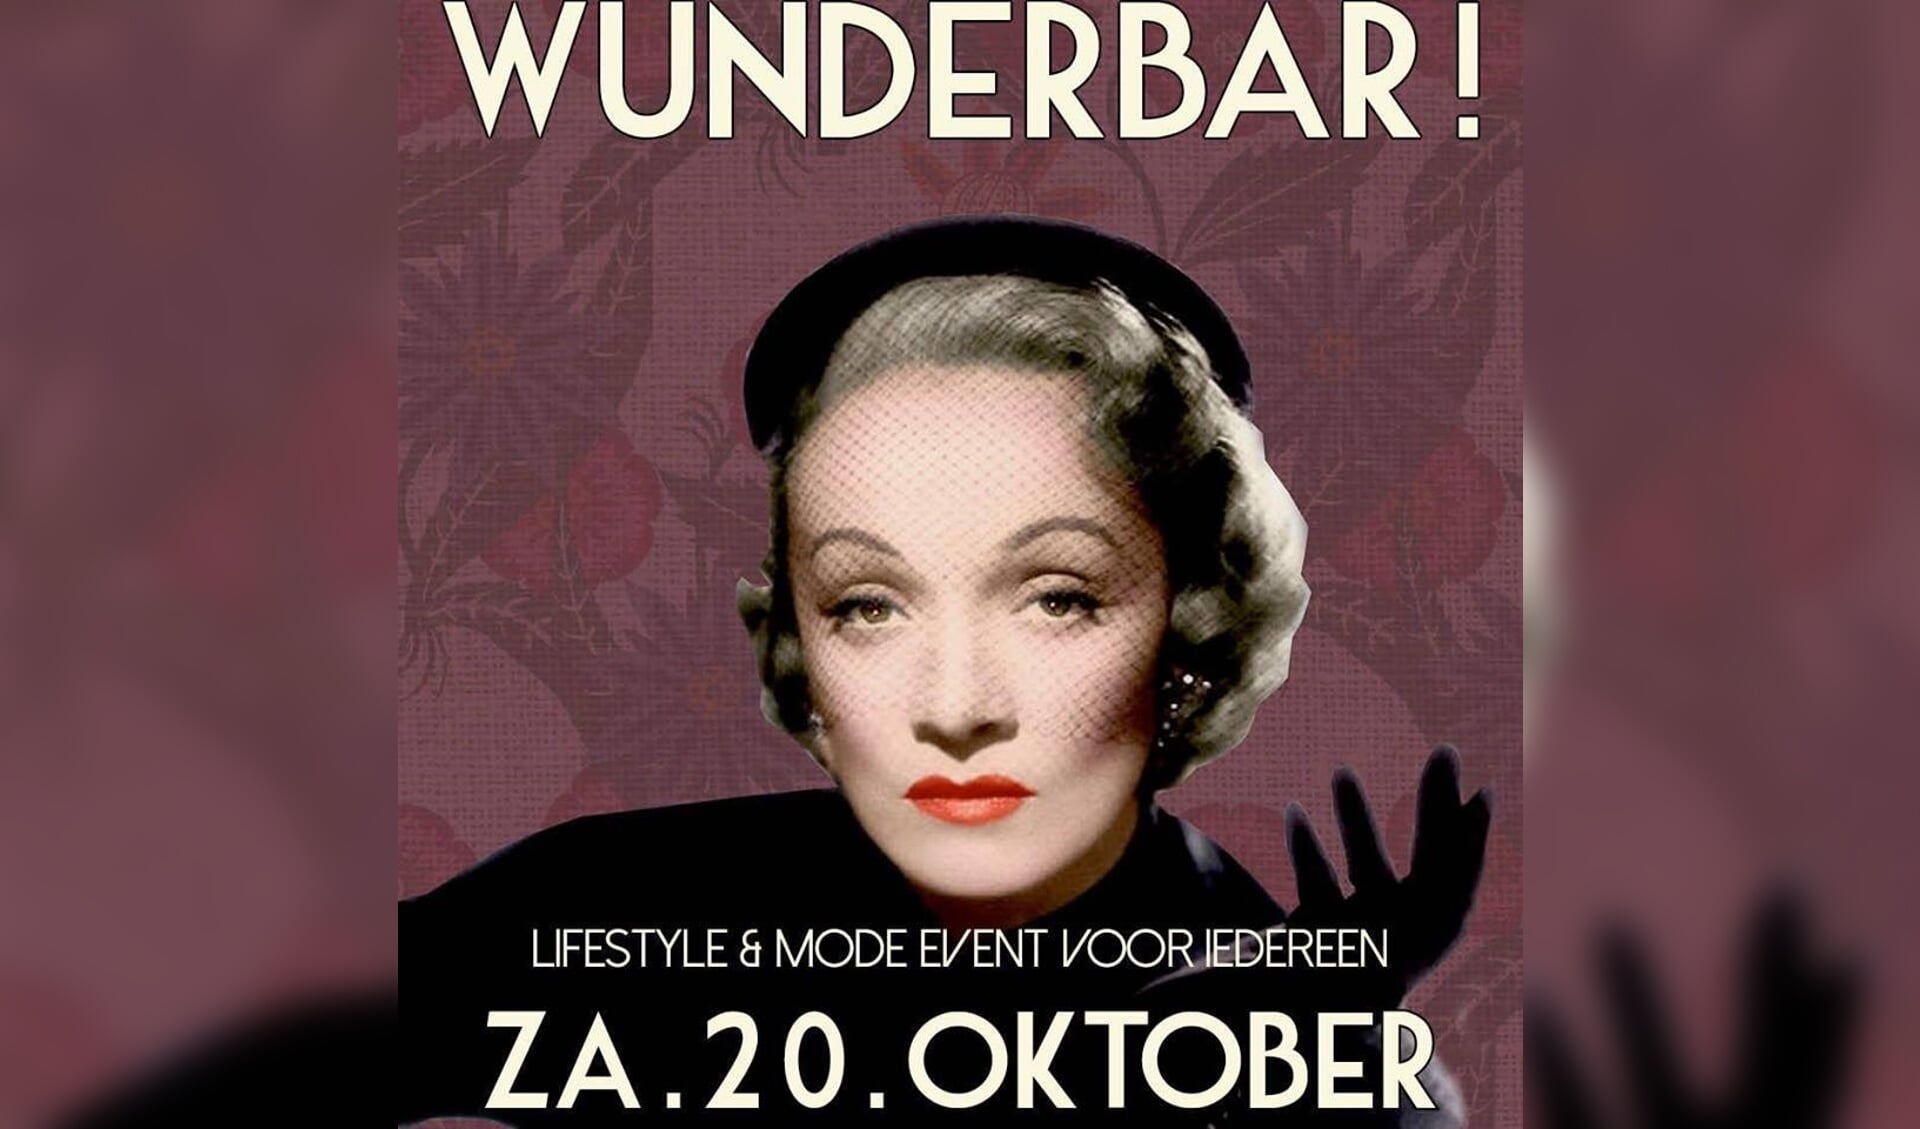 Hét Walcherse Mode- en Lifestyle event op zaterdag 20 oktober in de St. Jacobskerk in Vlissingen.